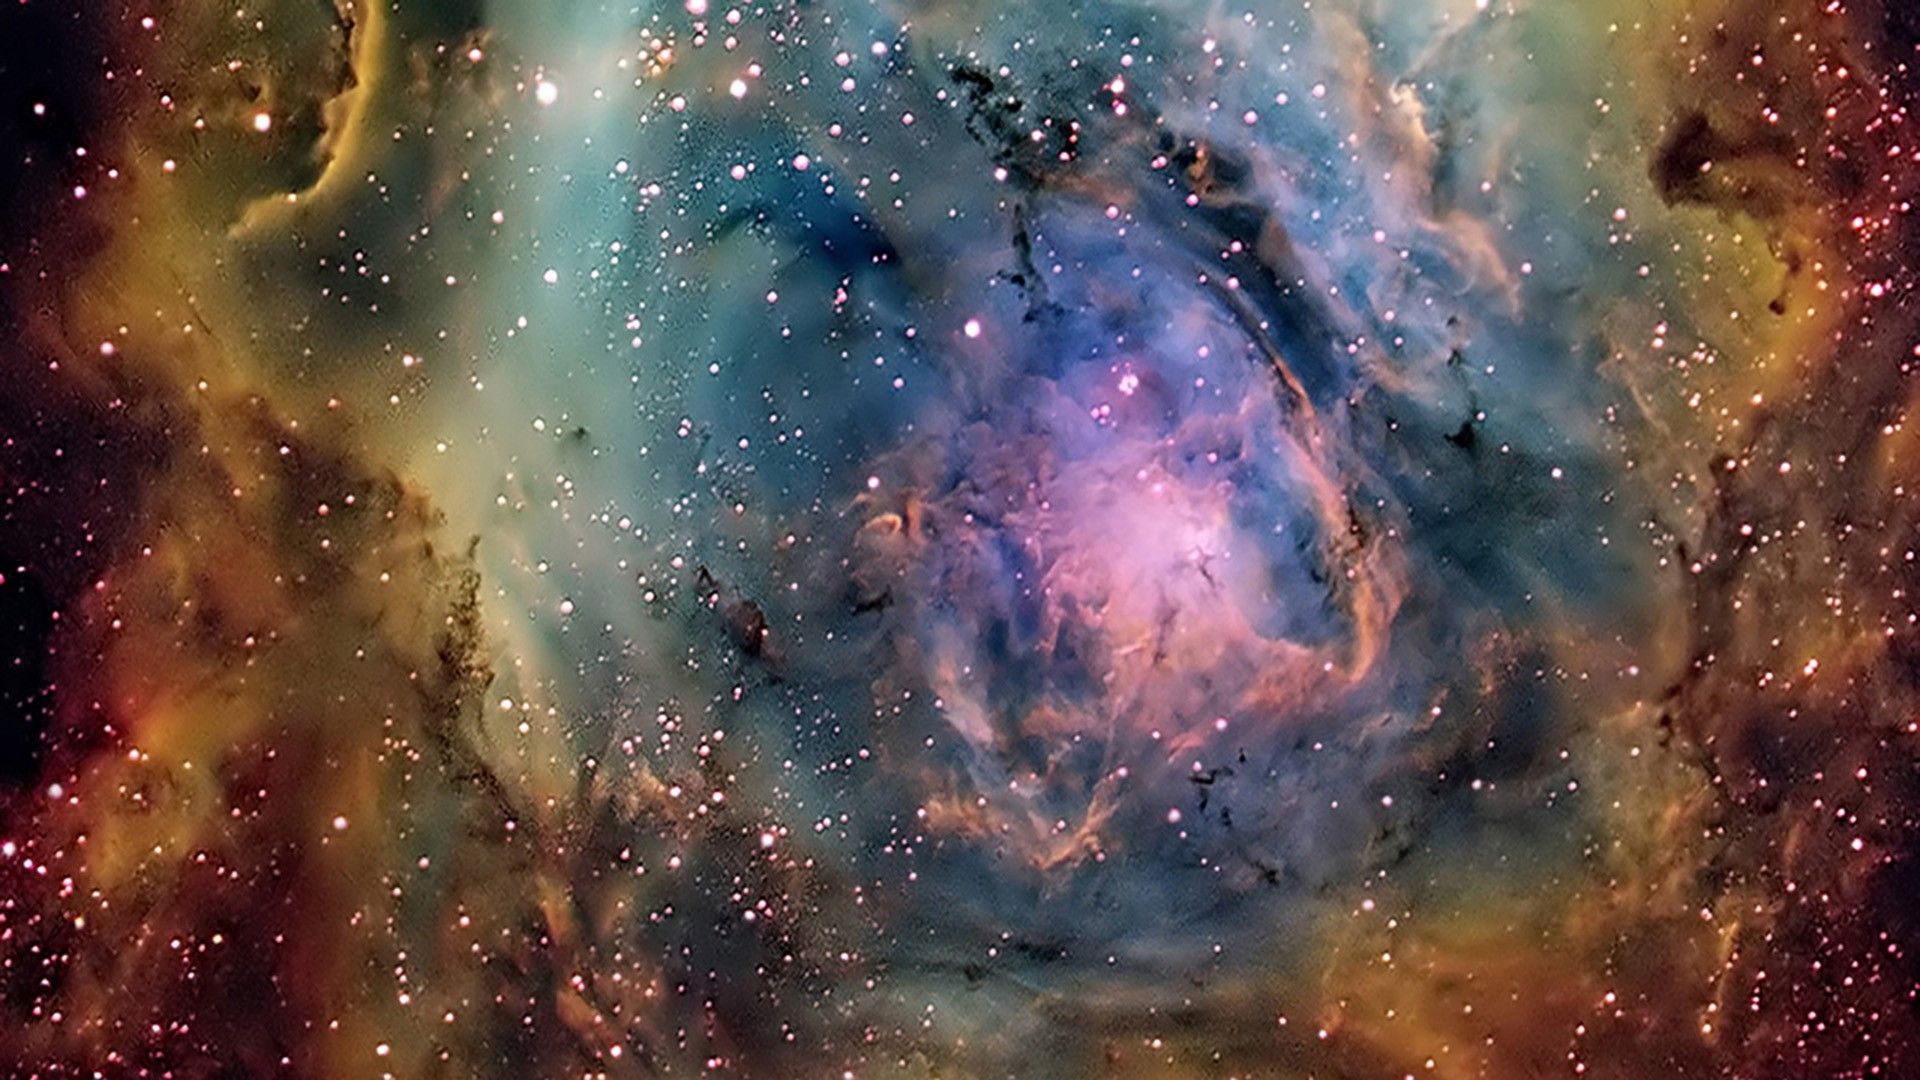 Eagle Nebula Full HD Pics Wallpaper Amazing Wallpaperz